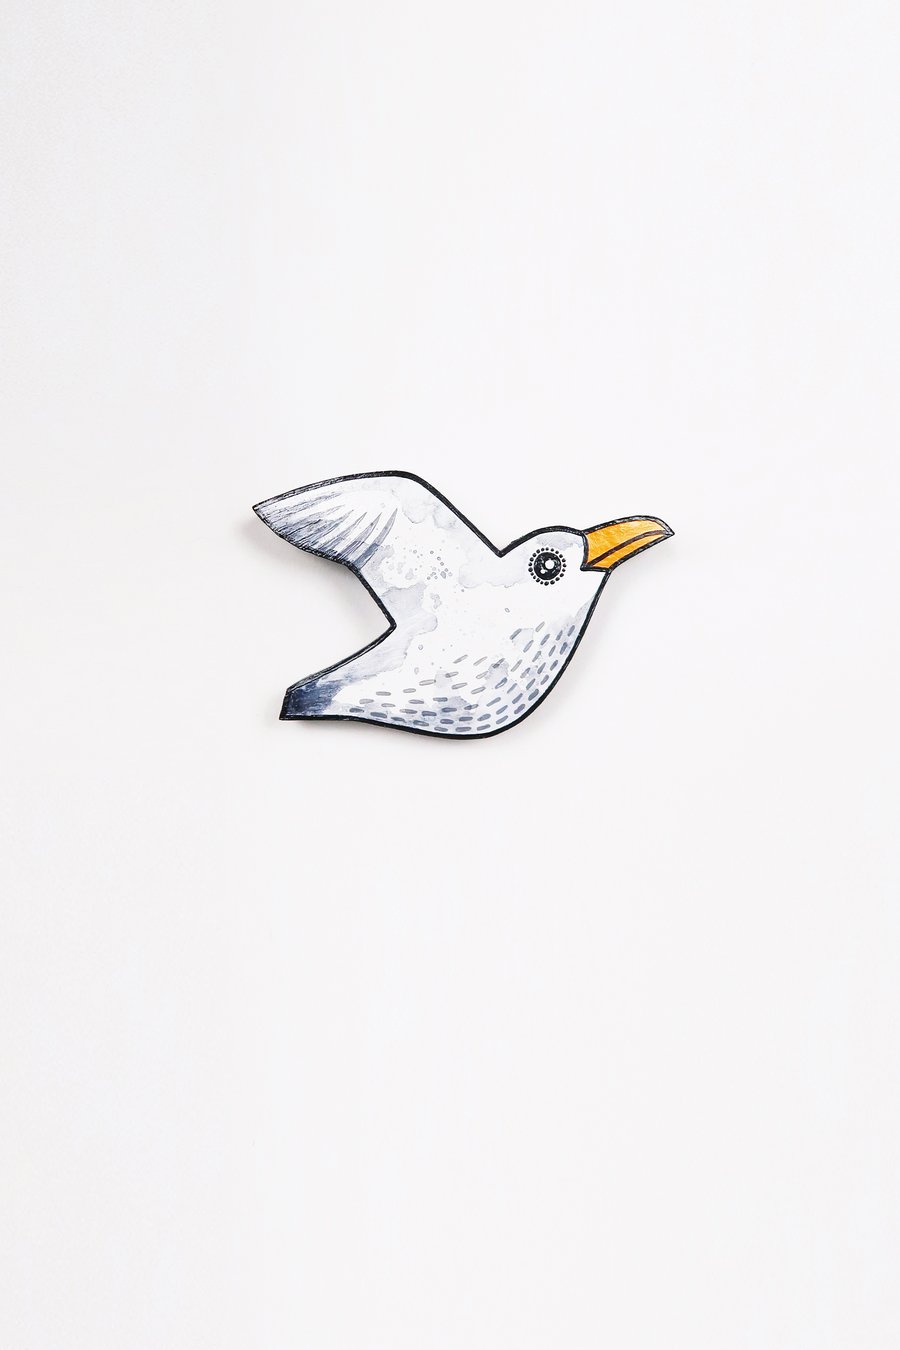 Seagull wall art, miniature flying bird, wooden hand painted home decor.